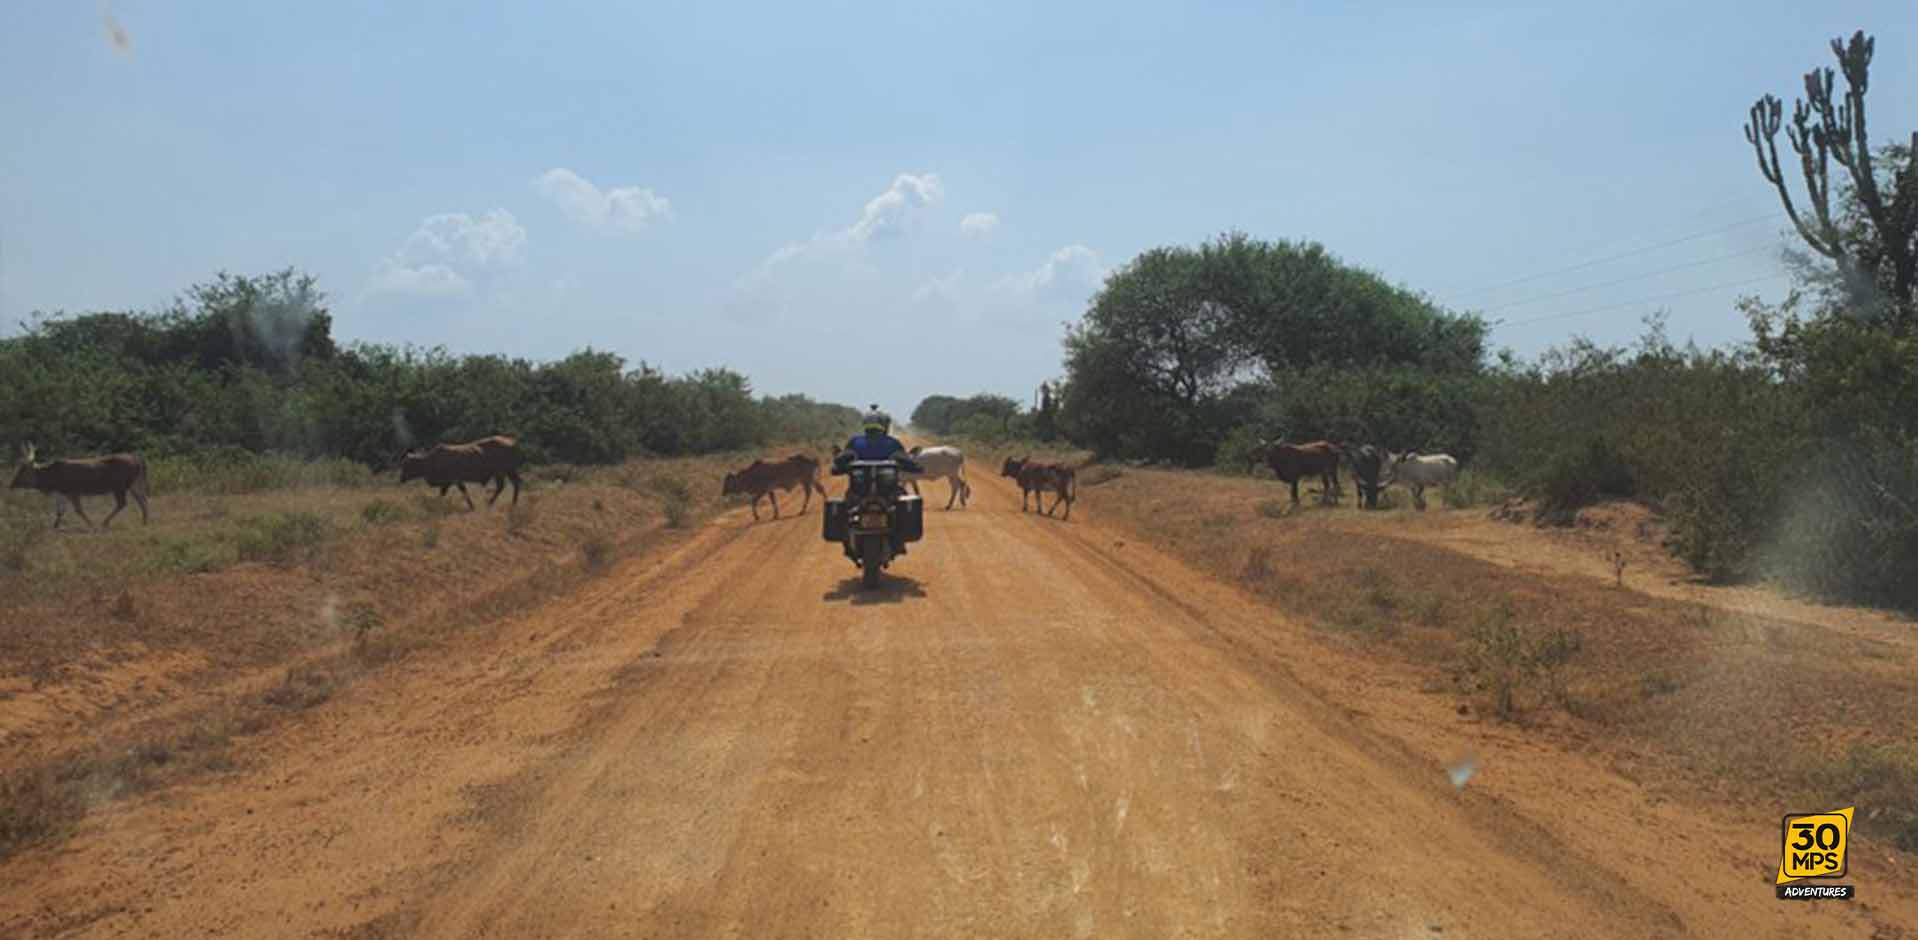 animales-viaje-aventura-moto-uganda-30mps